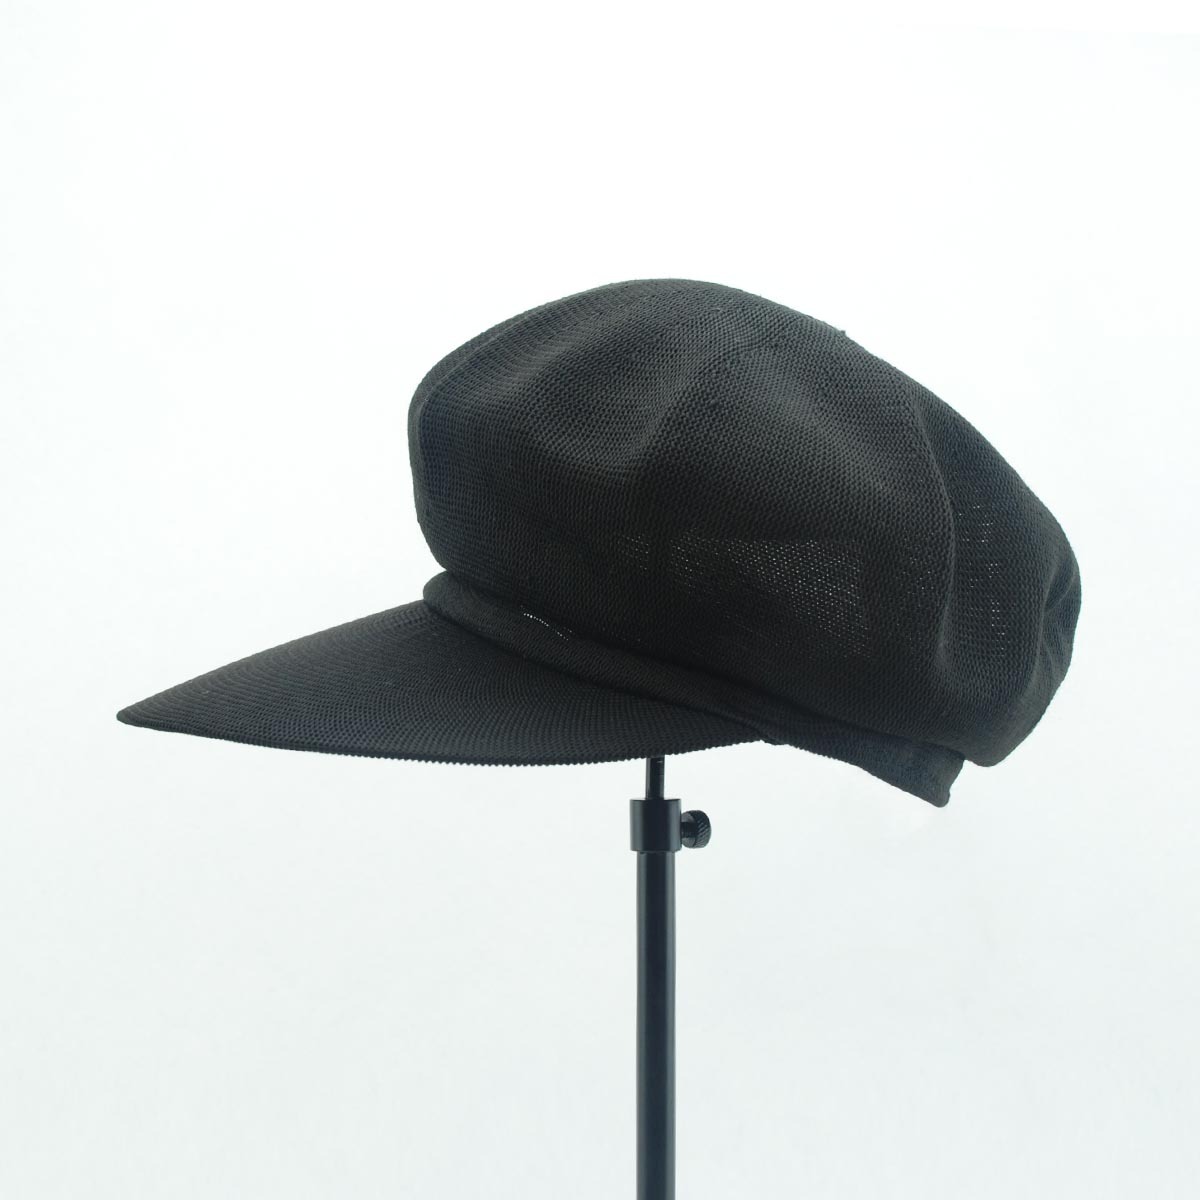 Captale fashion newsboy cap black star cap big sun-shading sun hat